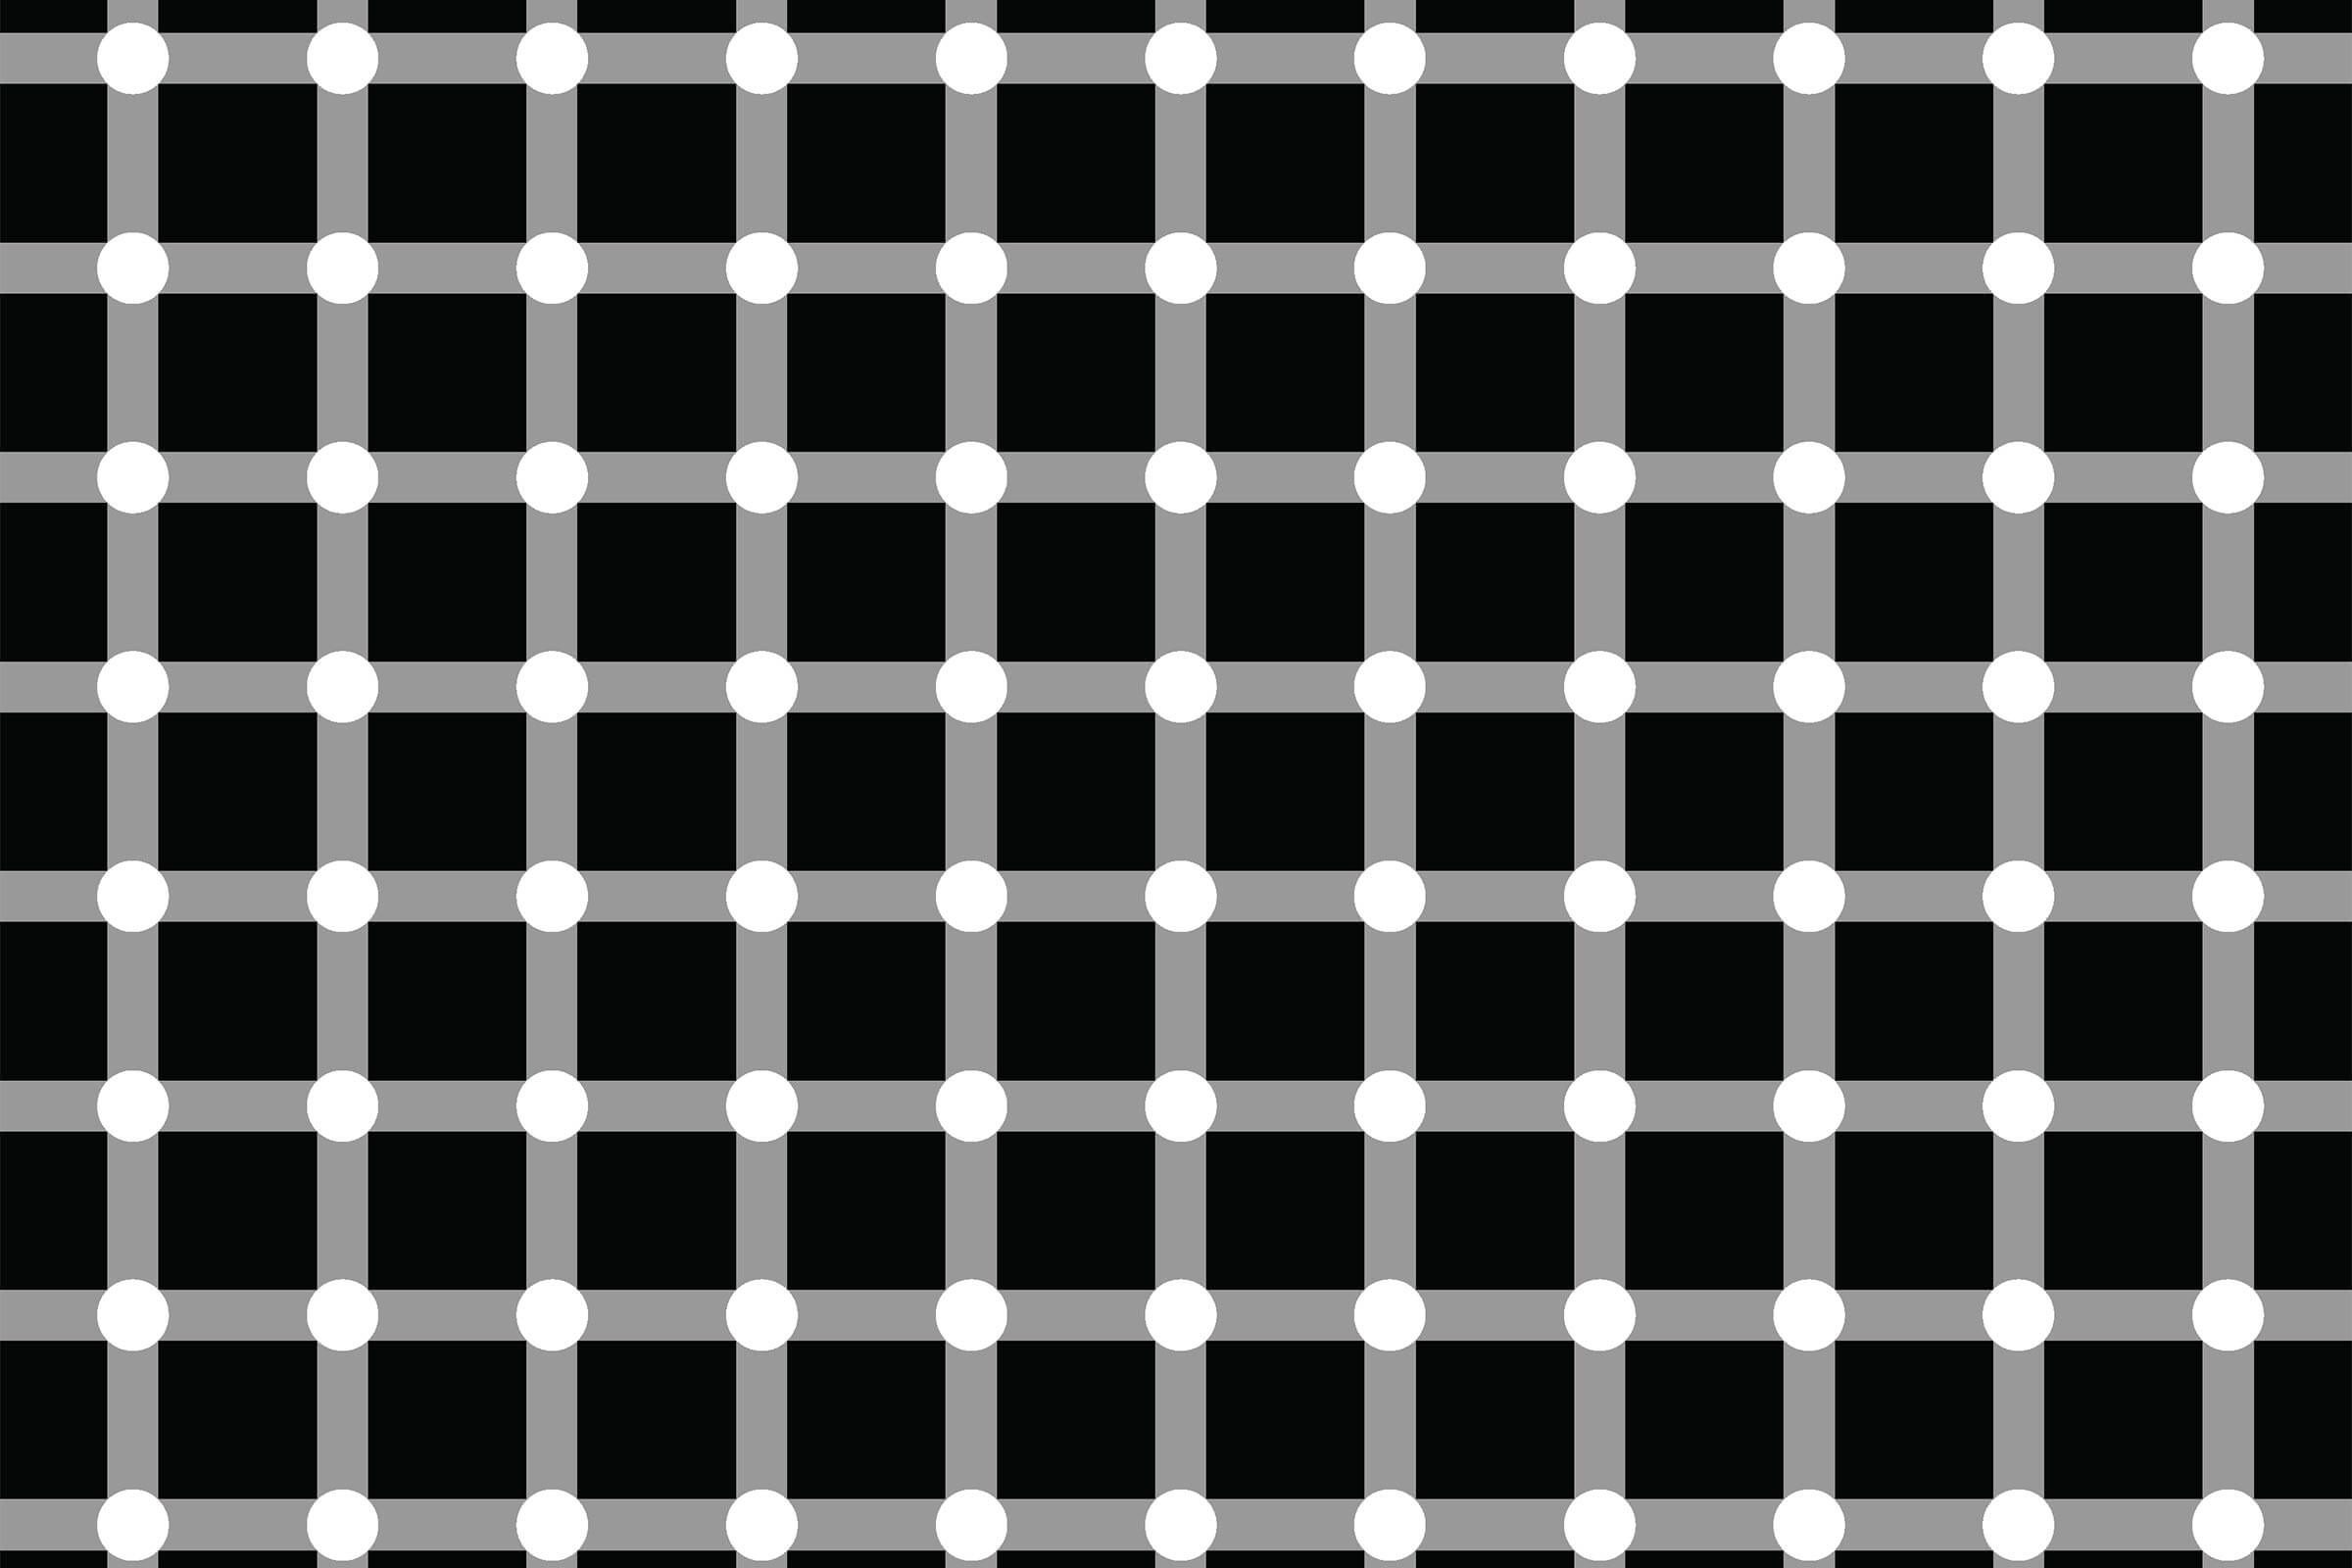 Classic Optical Illusions That Stump Everyone